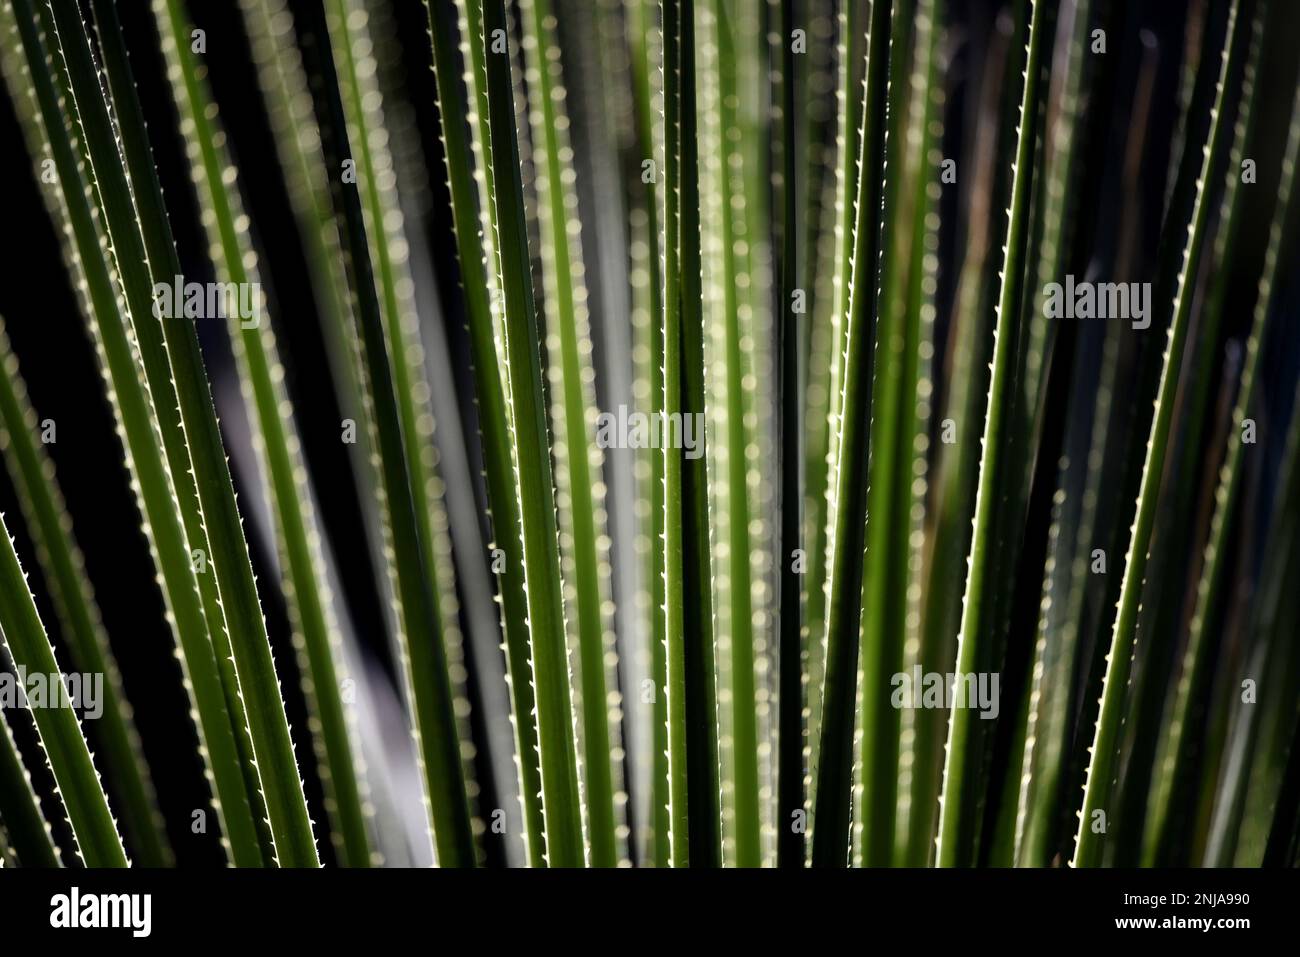 Dasylirion Glaucophyllum  a native plant to Mexico. Stock Photo